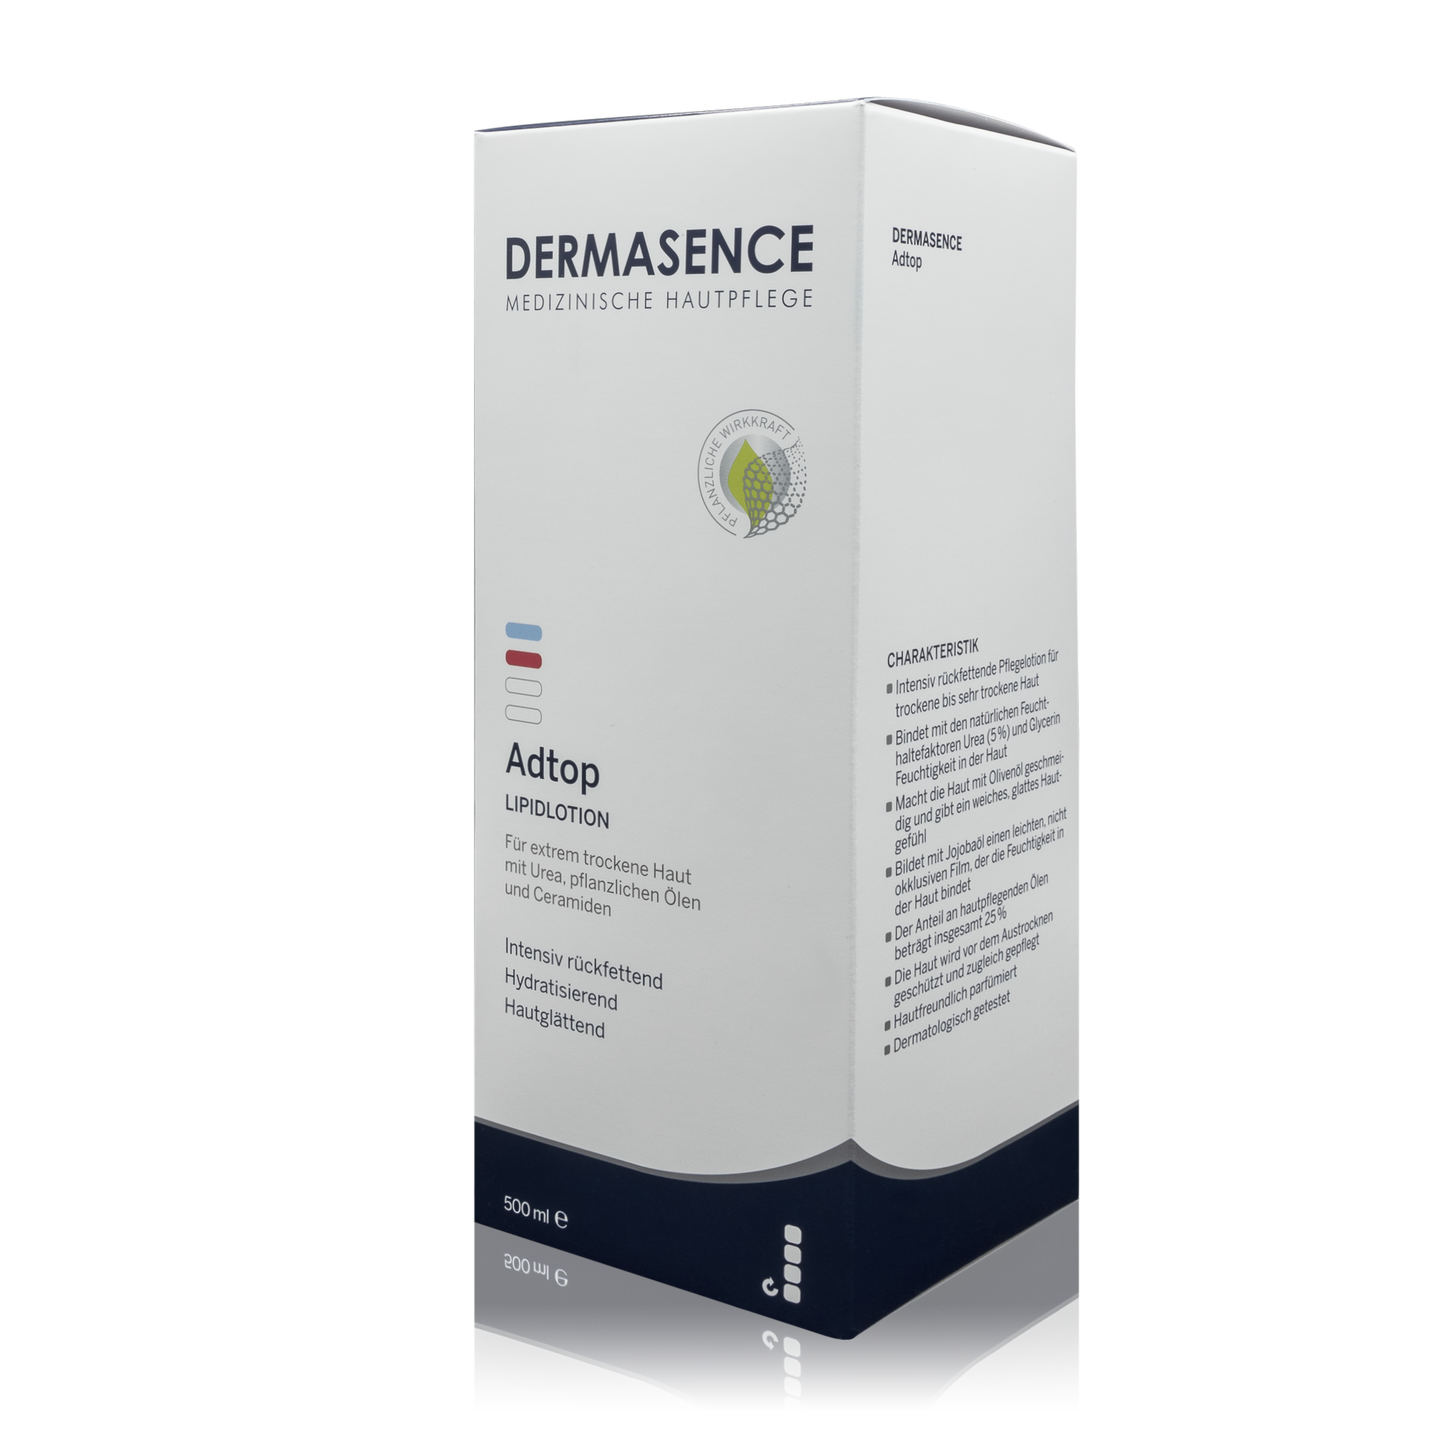 Dermasence Adtop Lipidlotion für extrem trockene Haut (500ml) - PZN: 17875932 - RoTe Place